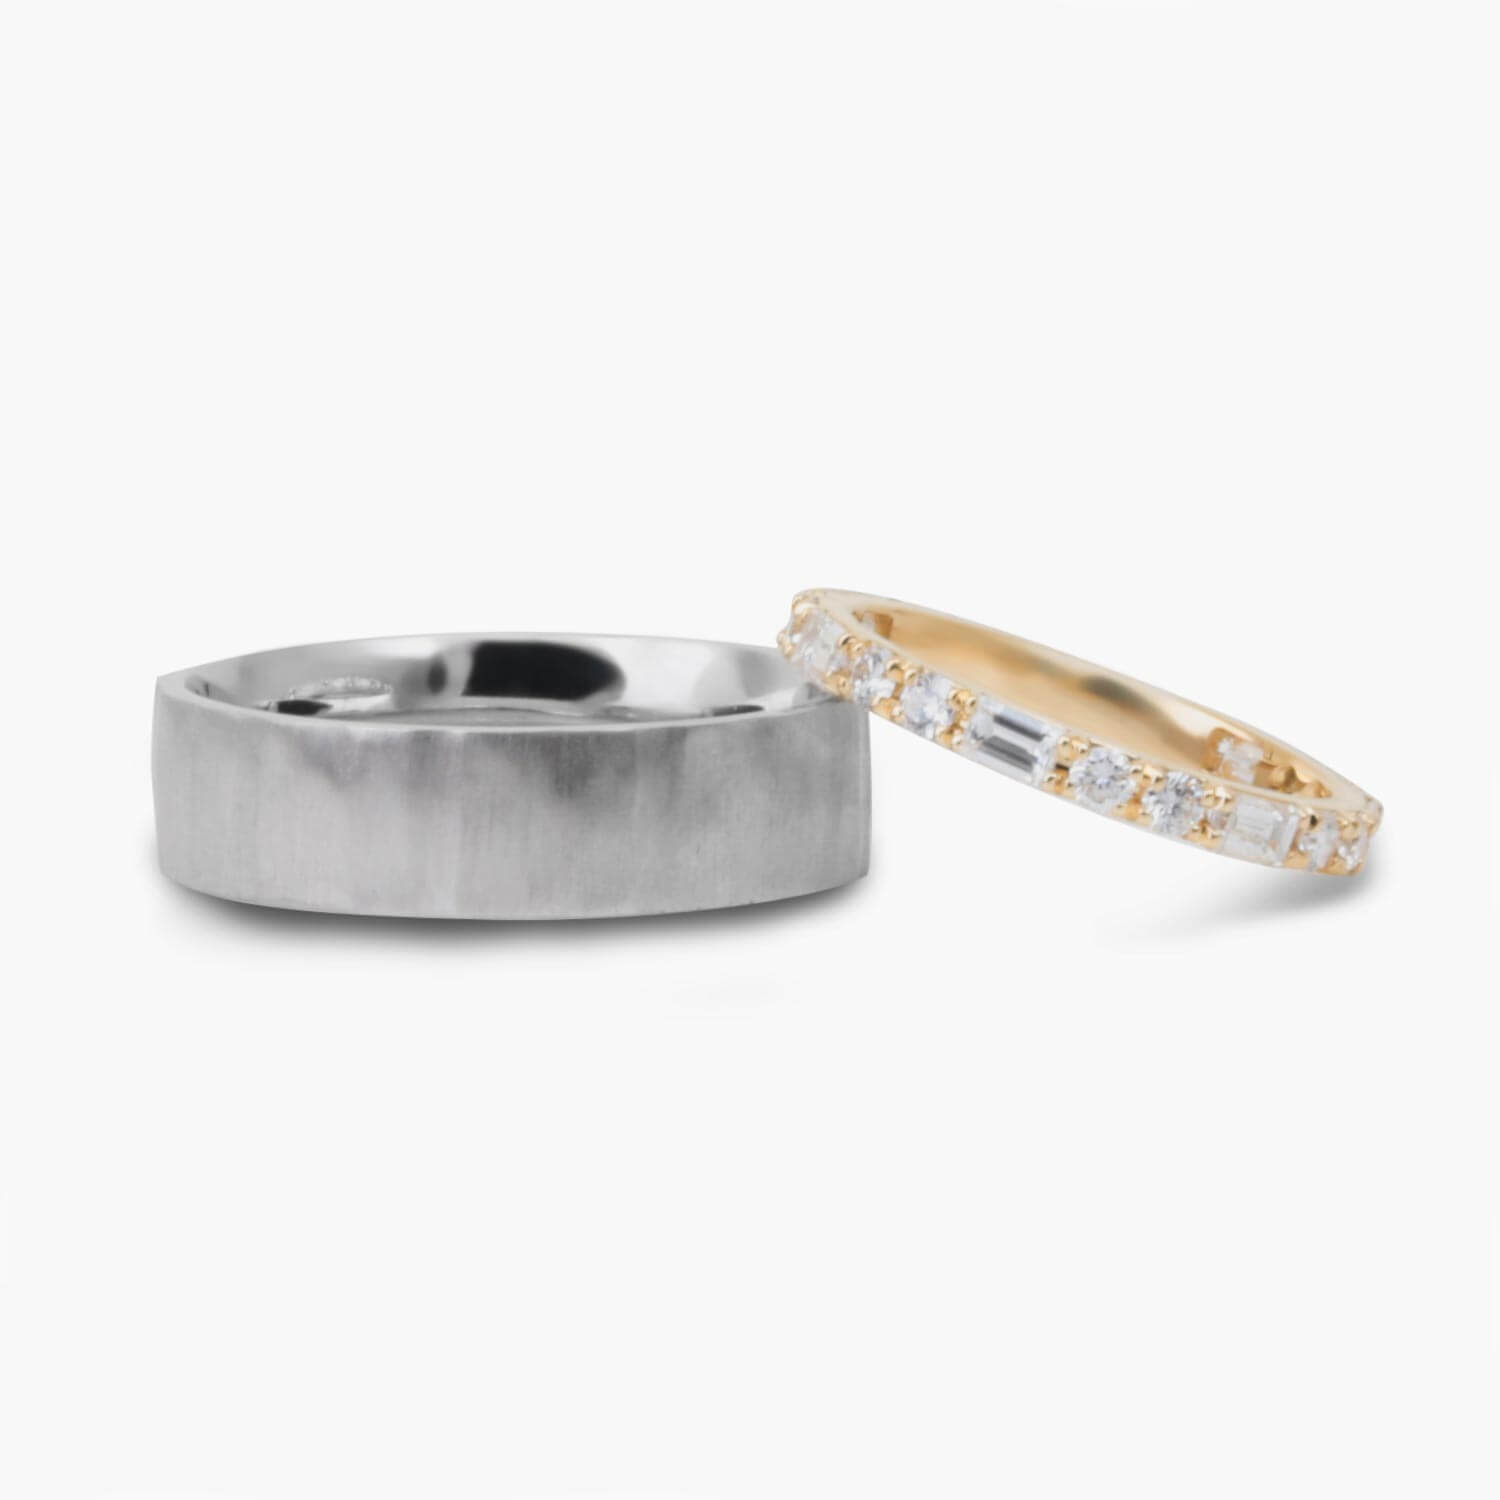 Bespoke Mixed Cut Diamond Wedding Ring